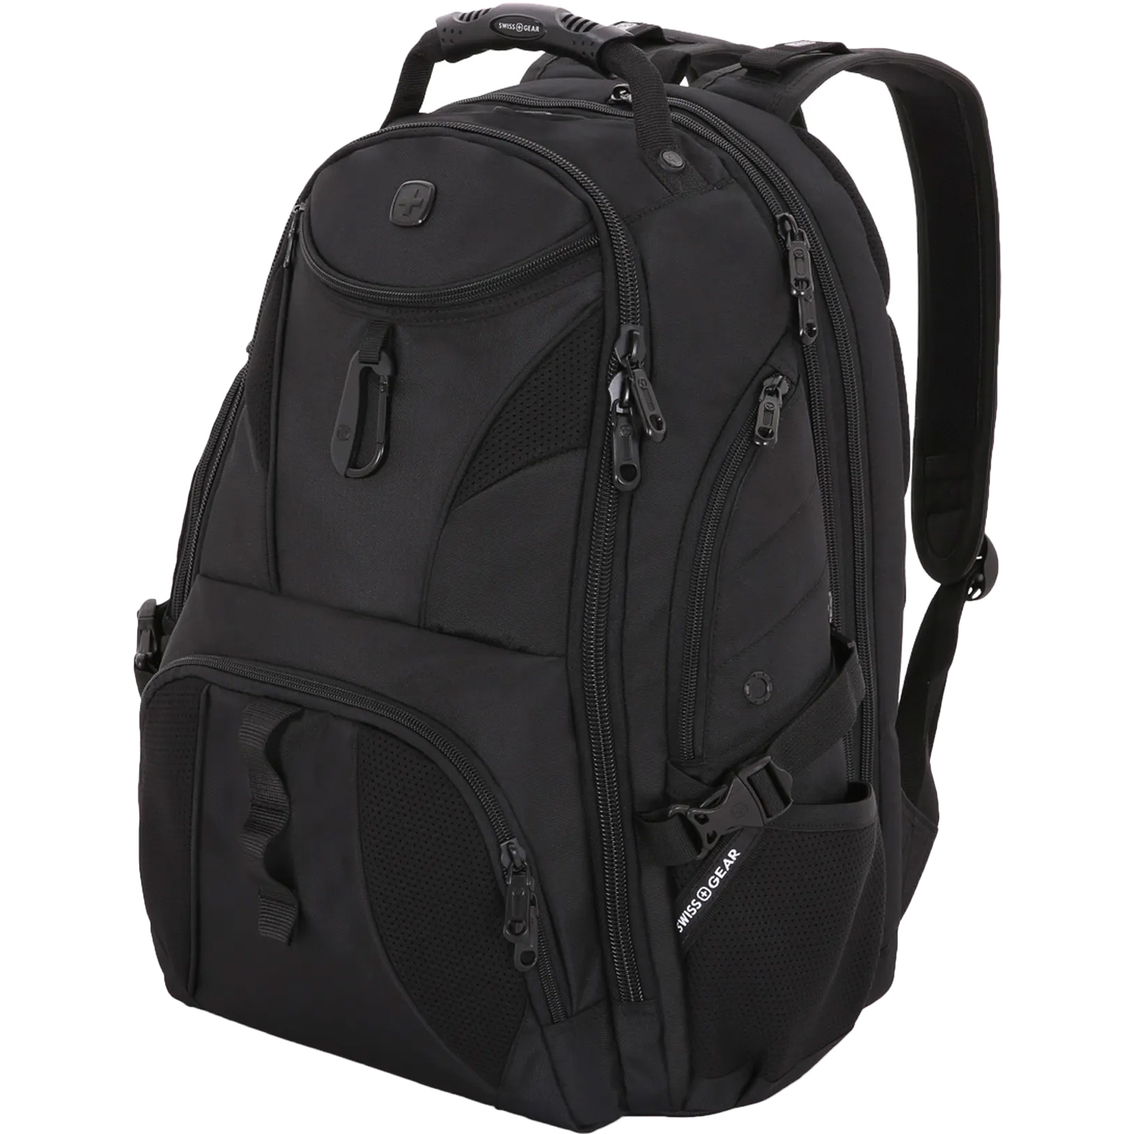 Swissgear Scansmart Backpack | Backpacks | Clothing & Accessories ...